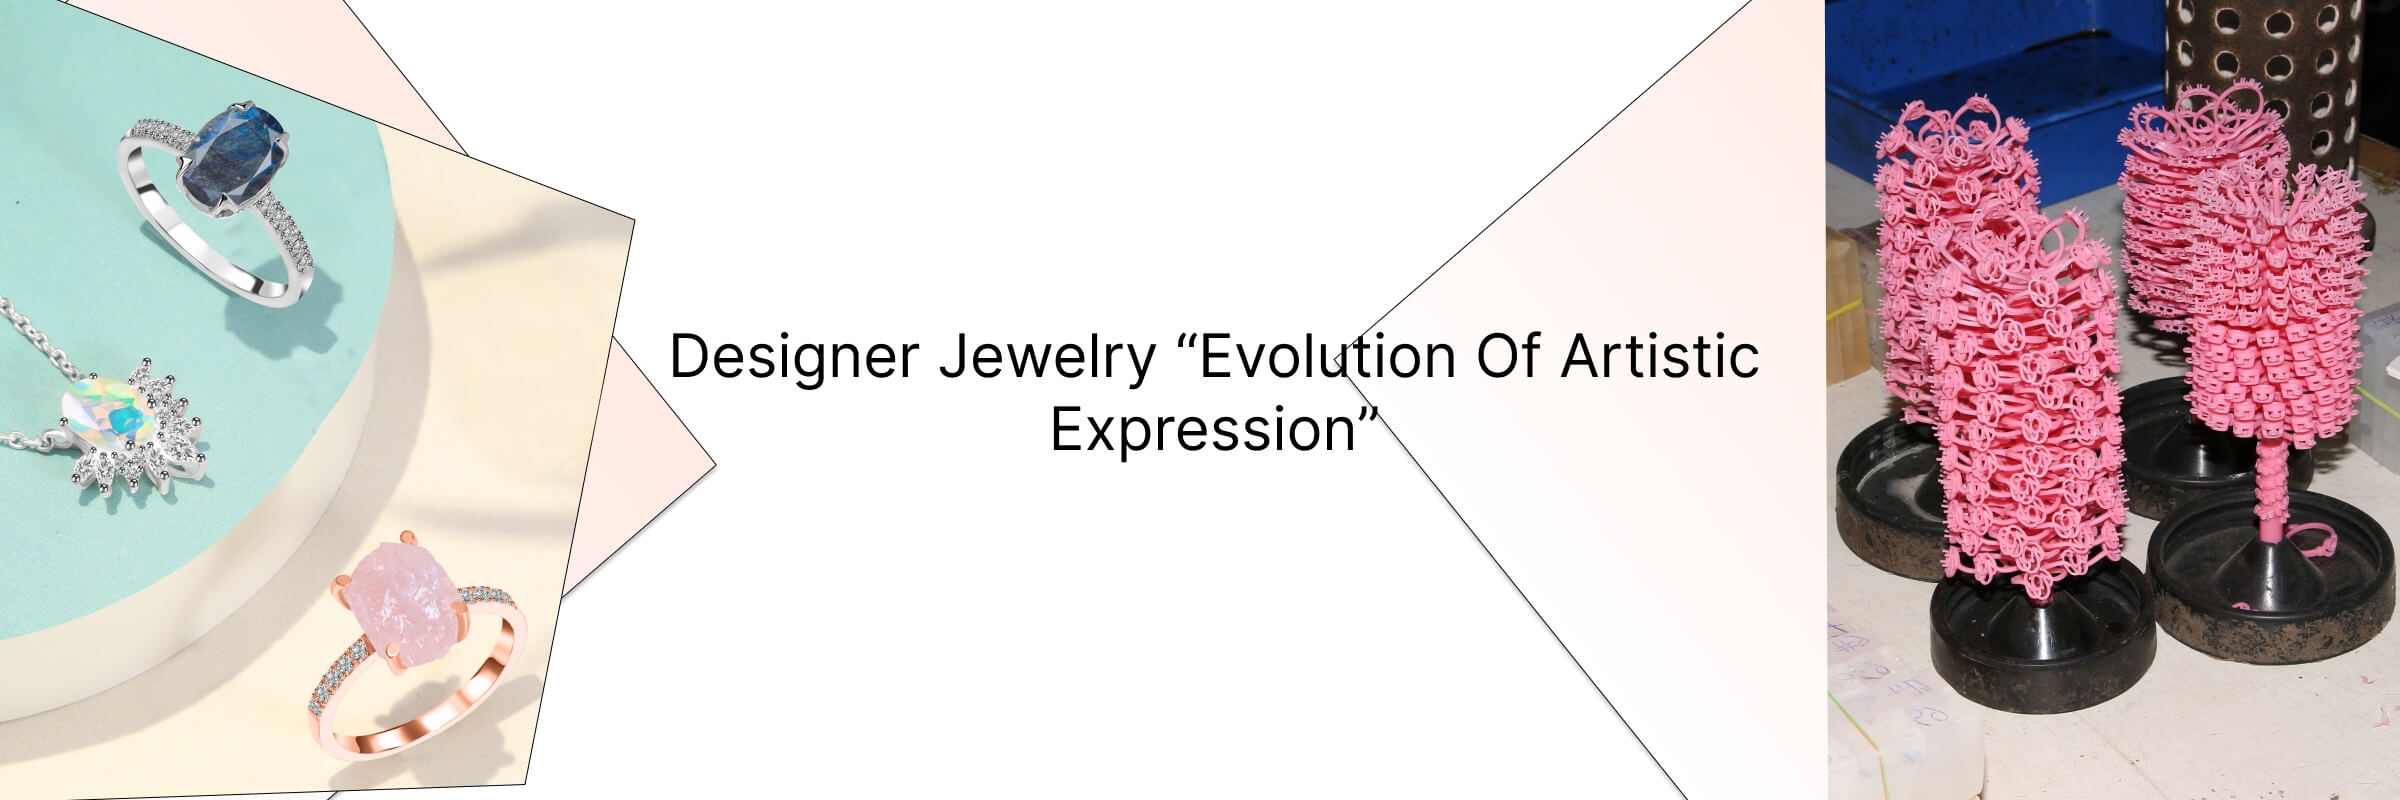 Evolvement of Signature Designs In Designer Jewelry